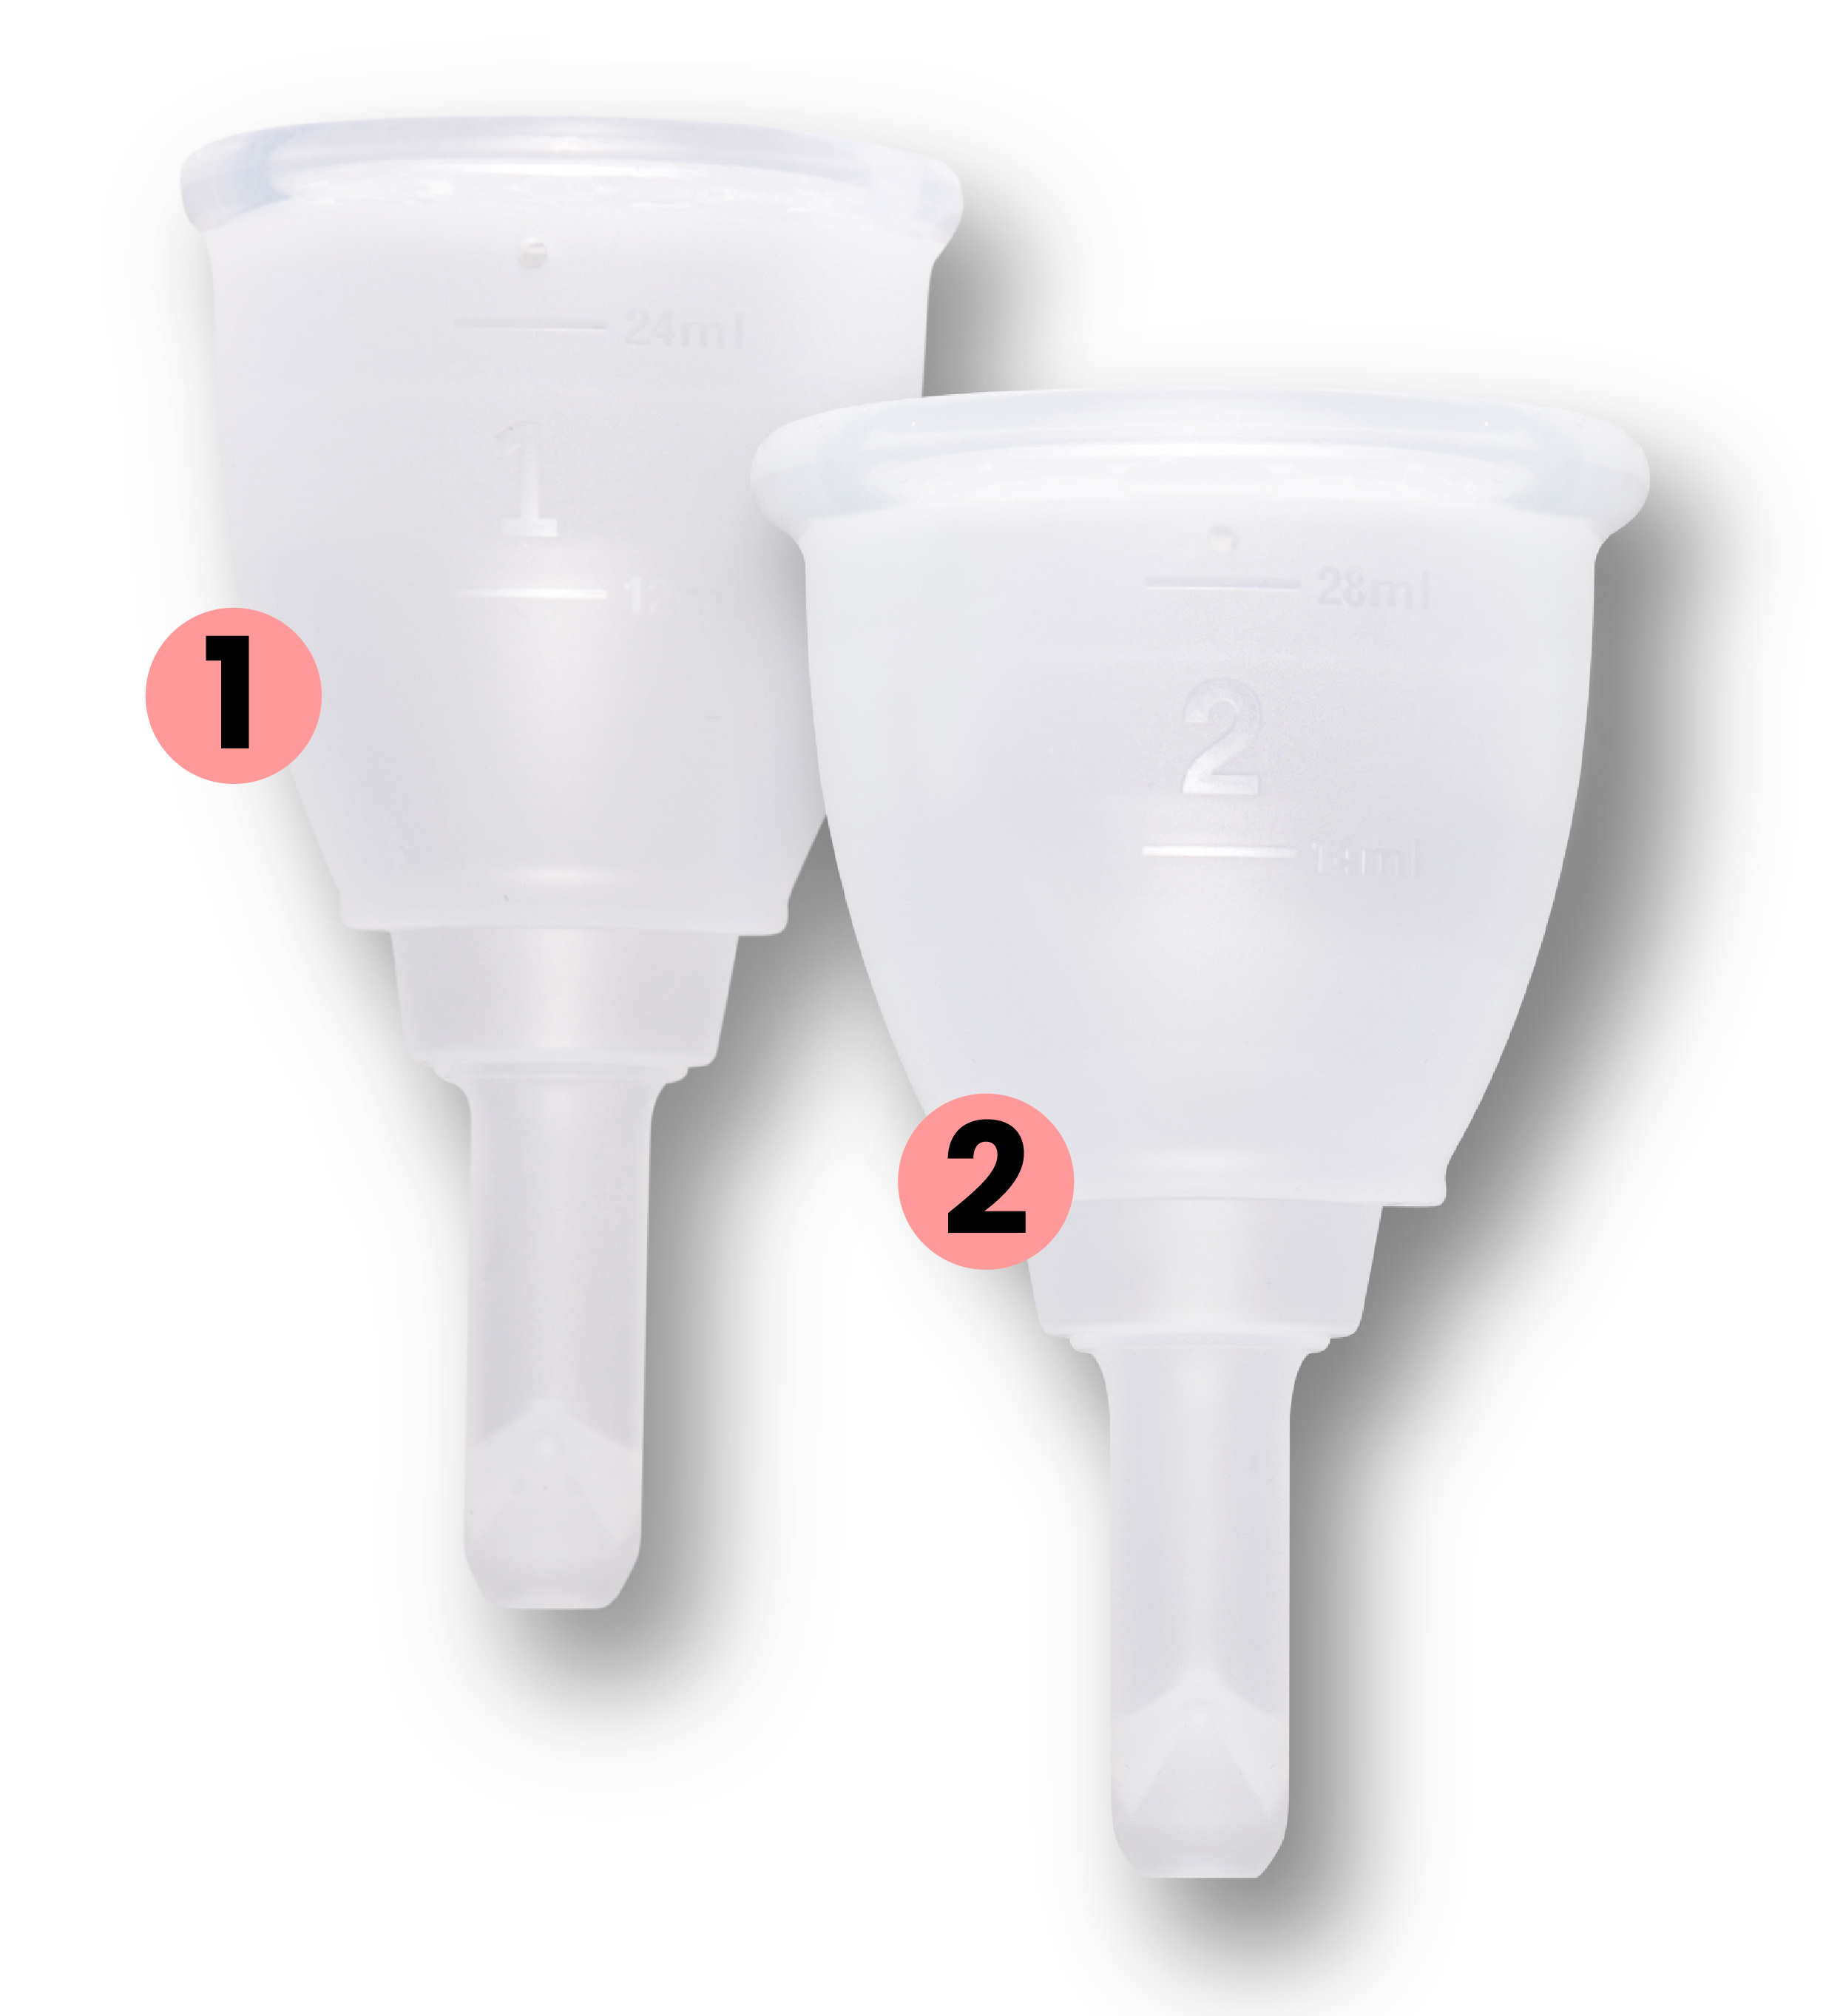 LUNACUP evolution menstrual cup how to choose a size